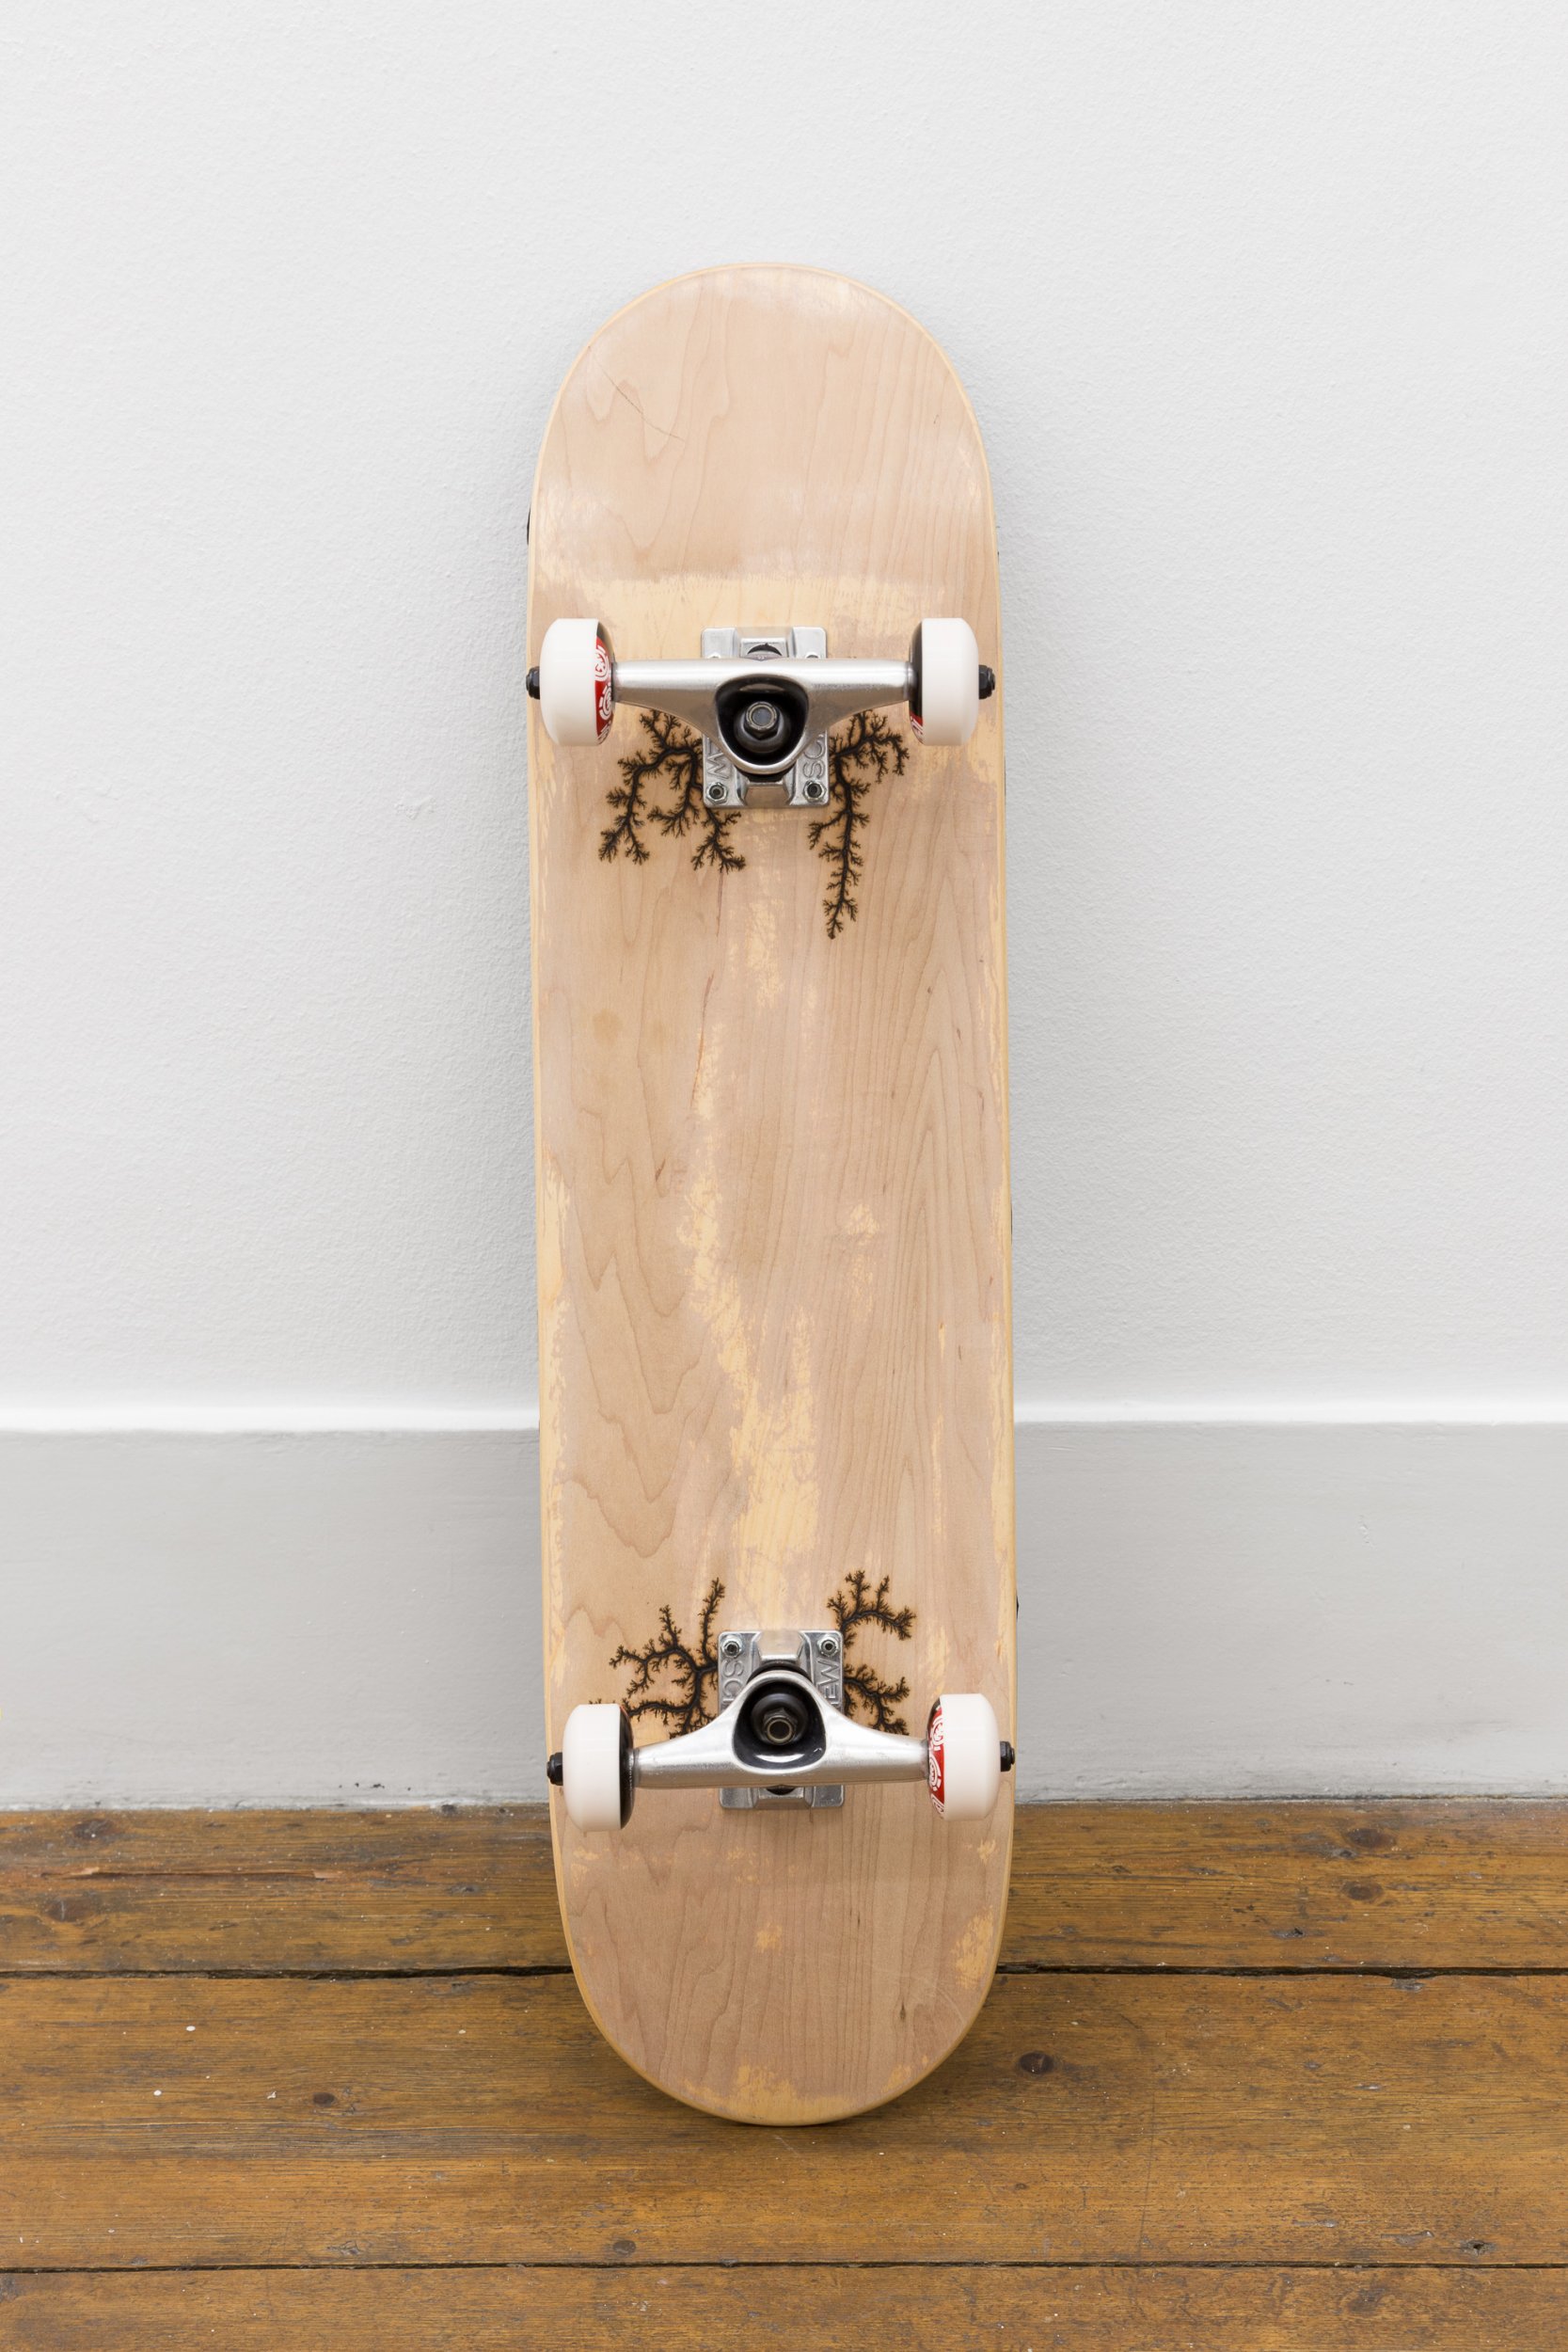 Nuno da Luz, Bullroarers, 2015
Skateboards, trucks, wheels, bearings, grip, 9000 volts. 80 x 20 x 10 cm
